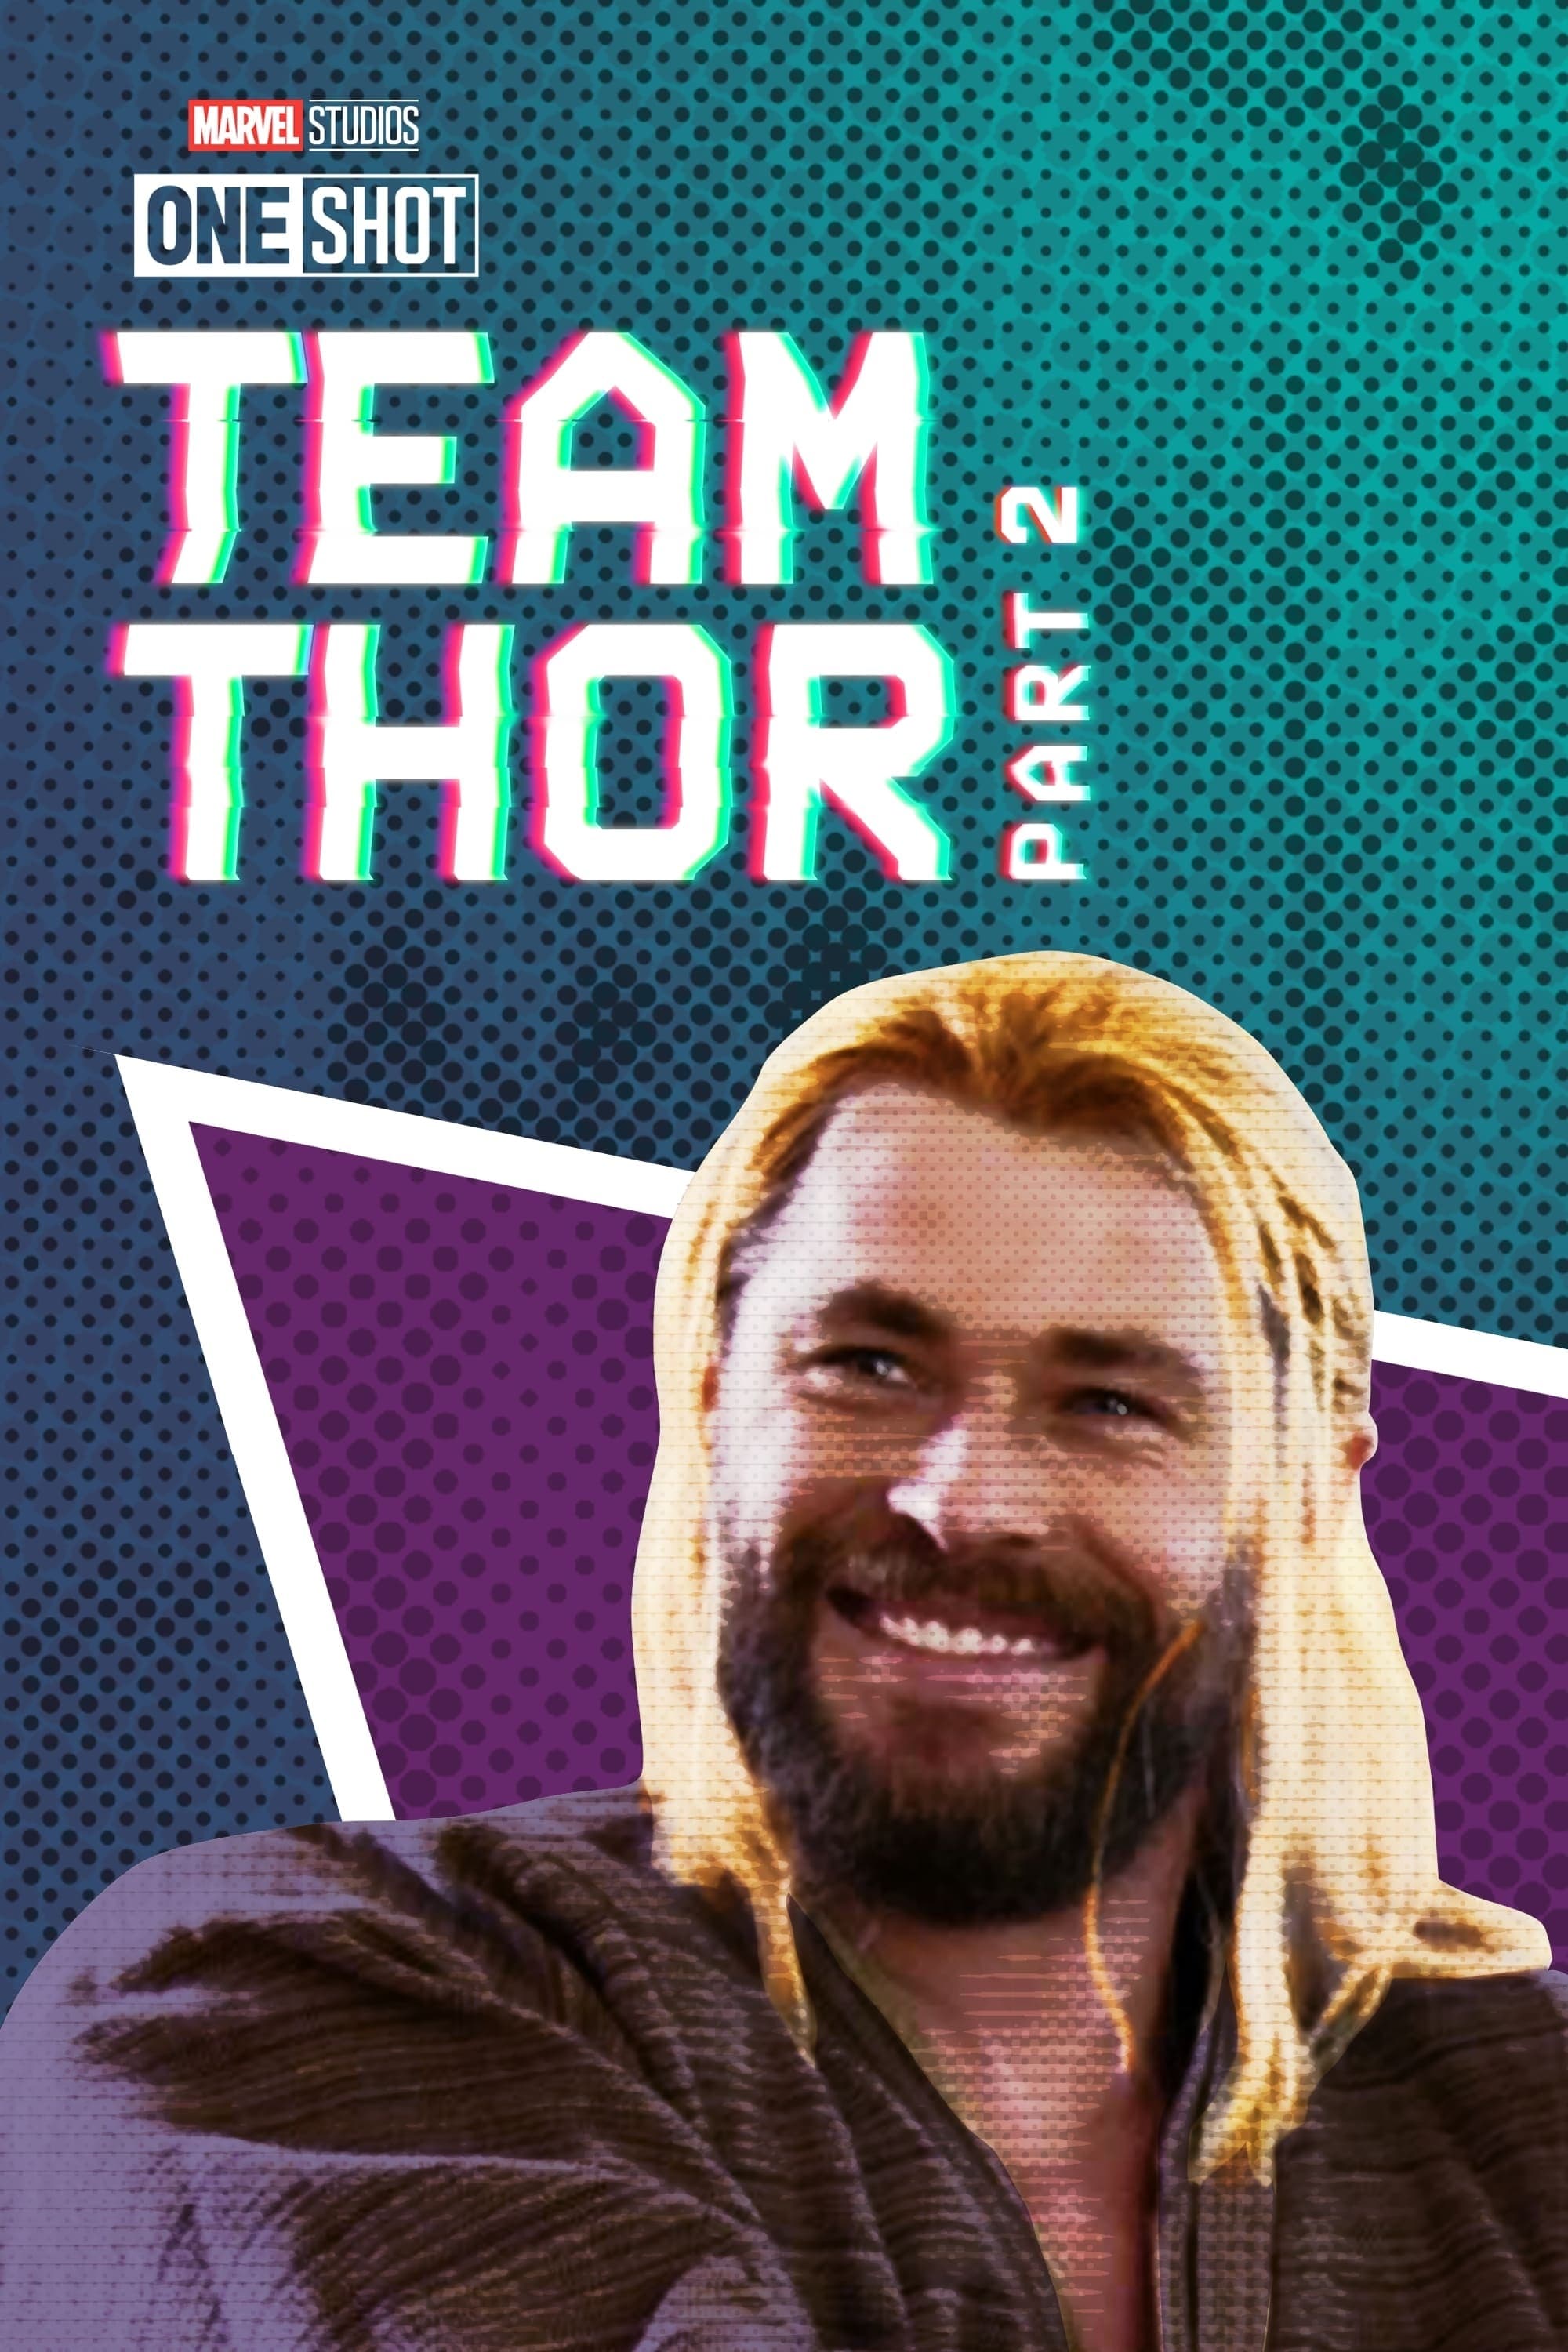 Equipo Thor: Segunda parte